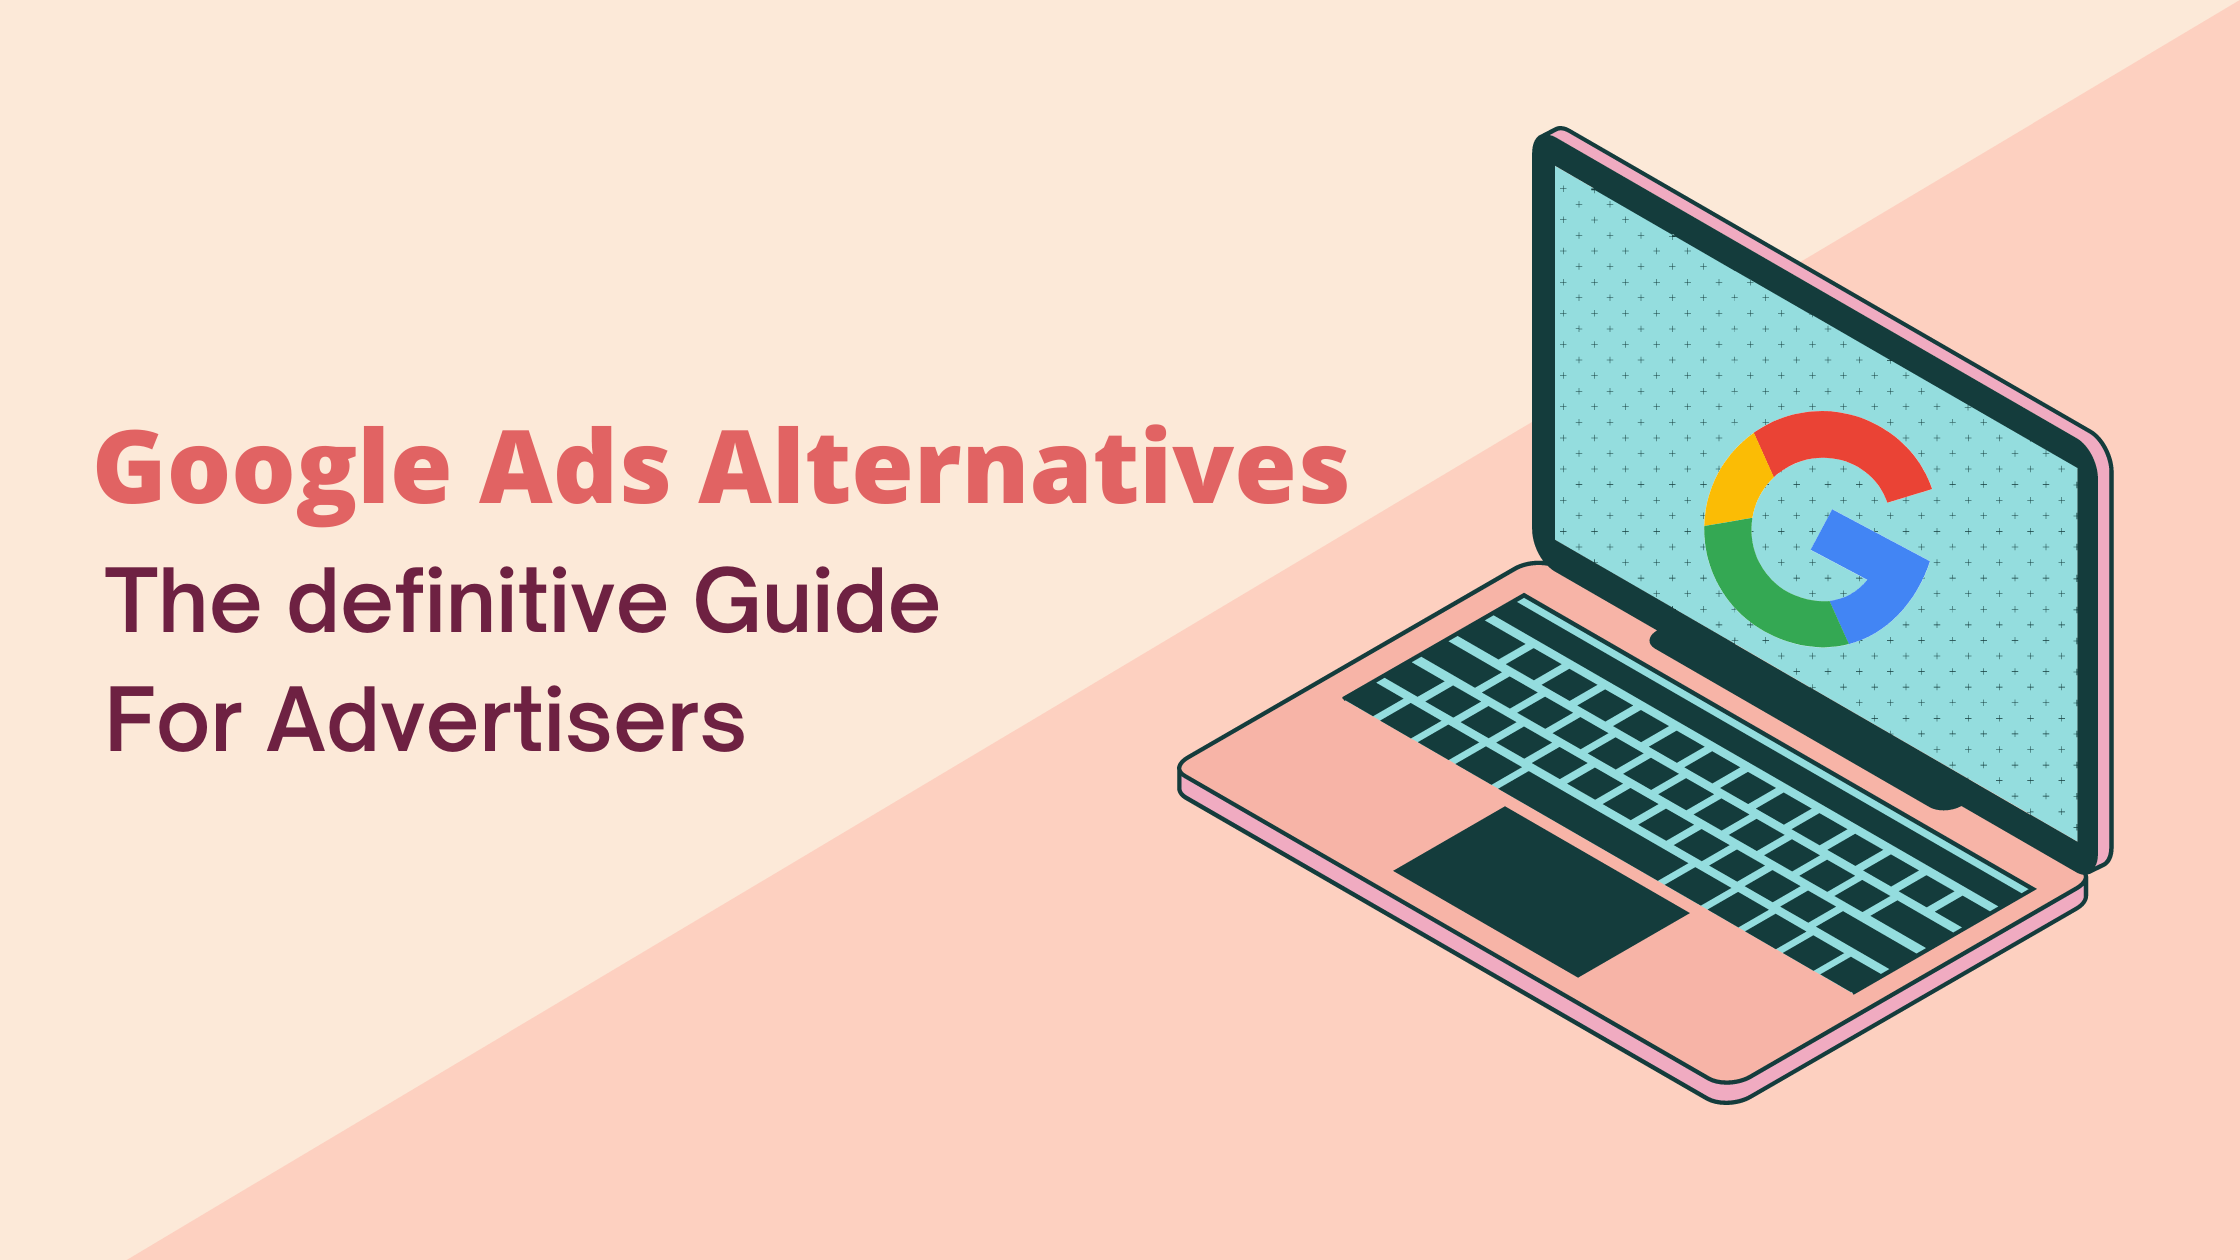 Google AdWords Alternatives: The Best Platforms For Effective SEA